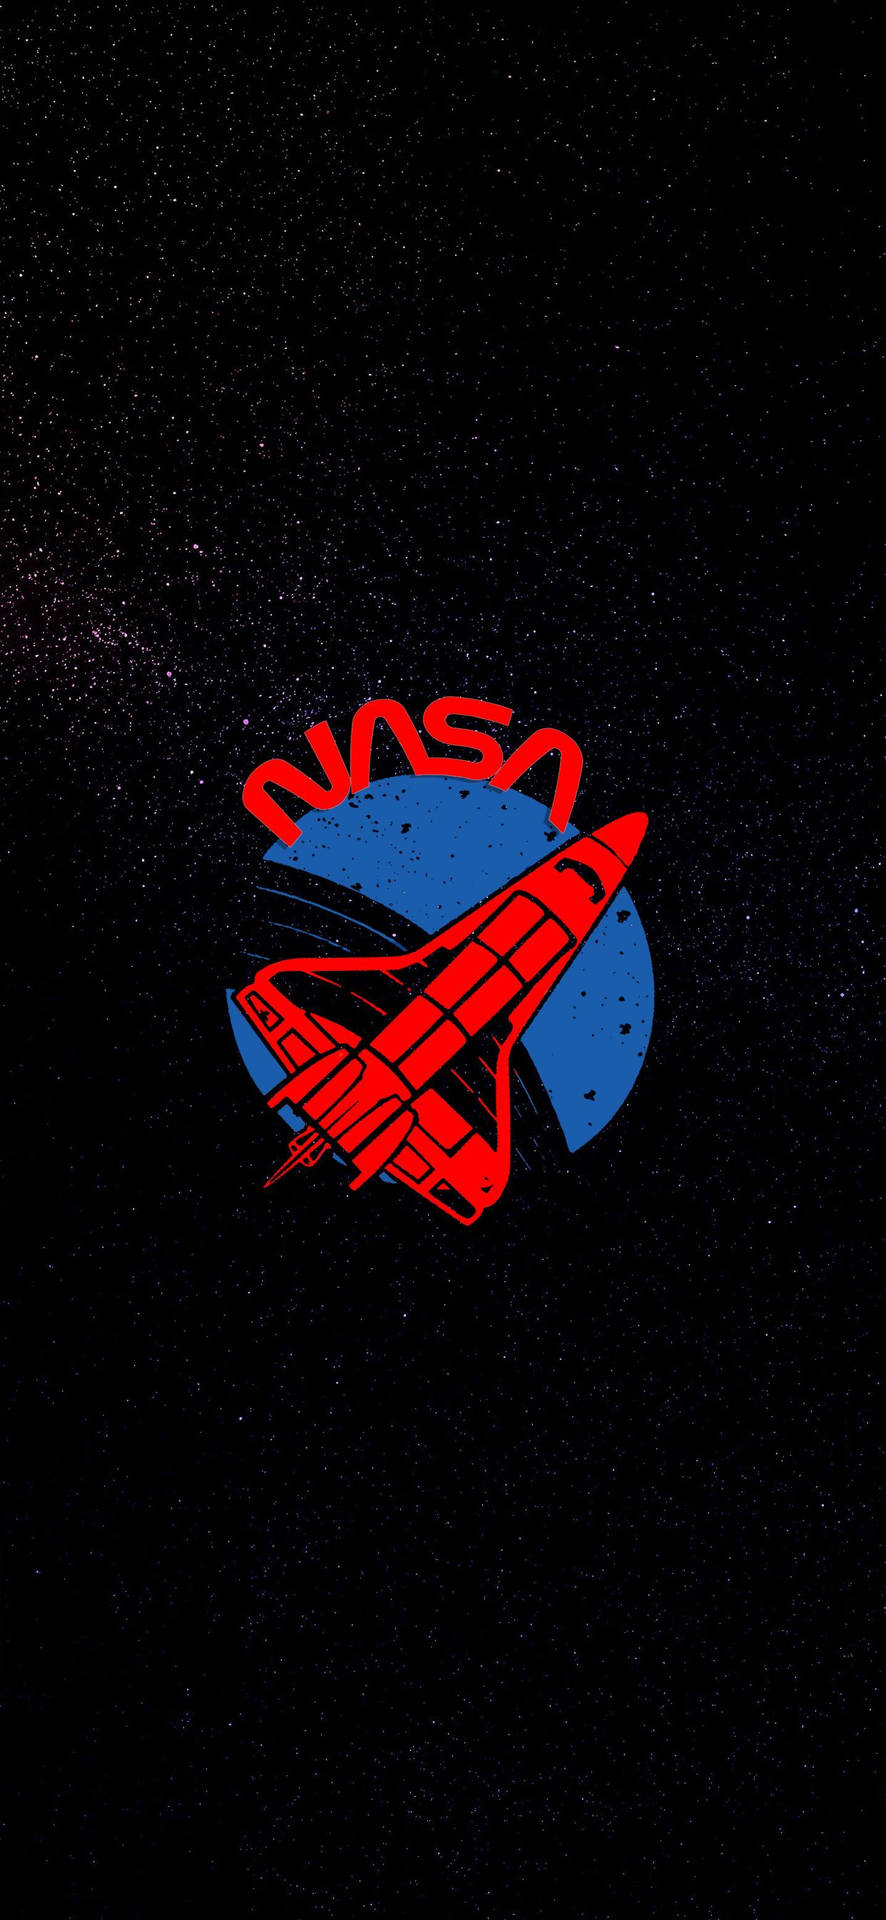 NASA iPhone Worm Space Shuttle Wallpaper